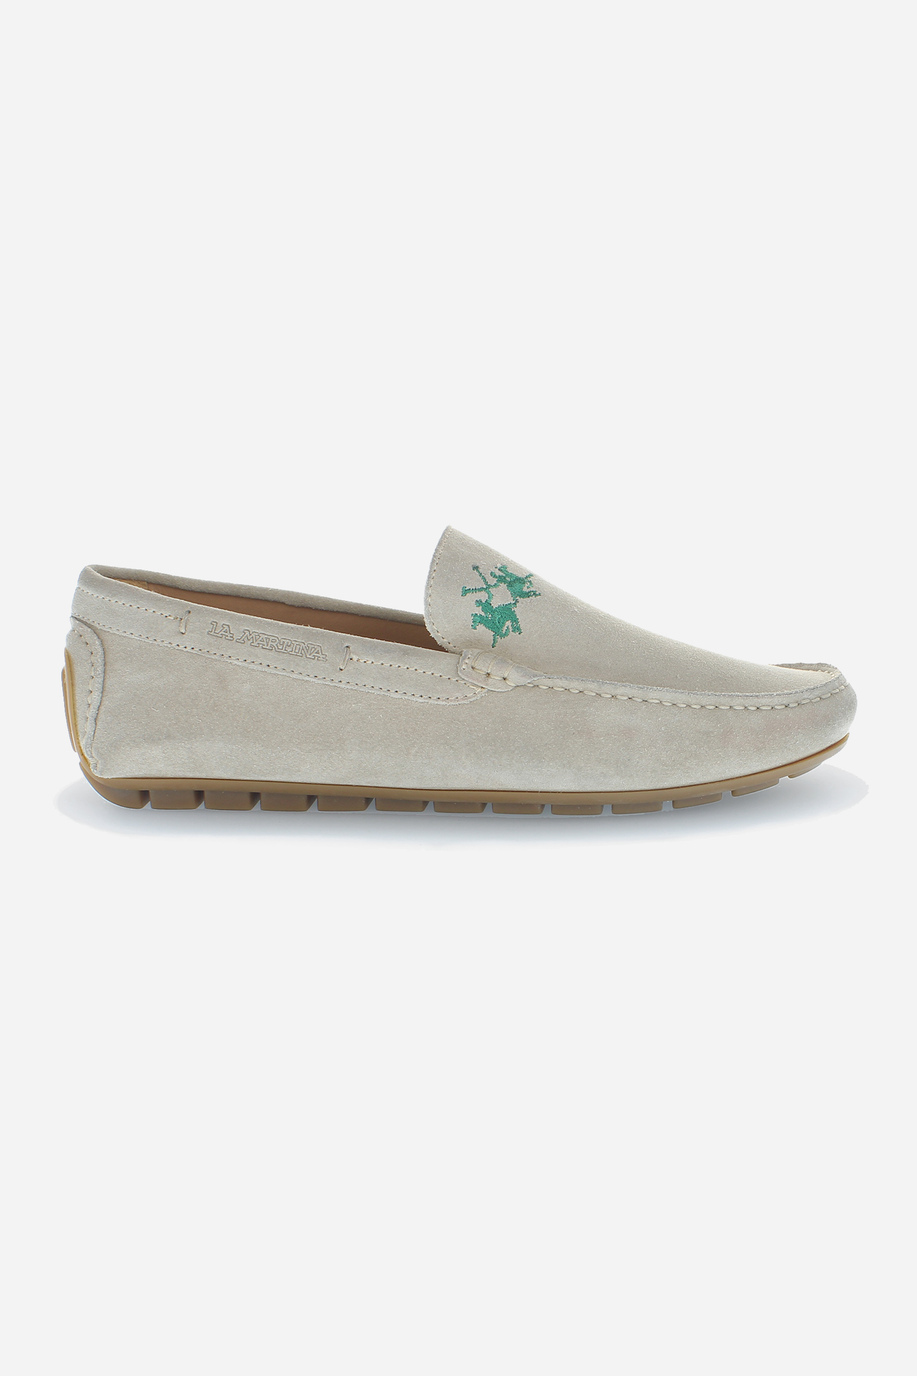 Mokassin aus Wildleder - Elegante Schuhe | La Martina - Official Online Shop